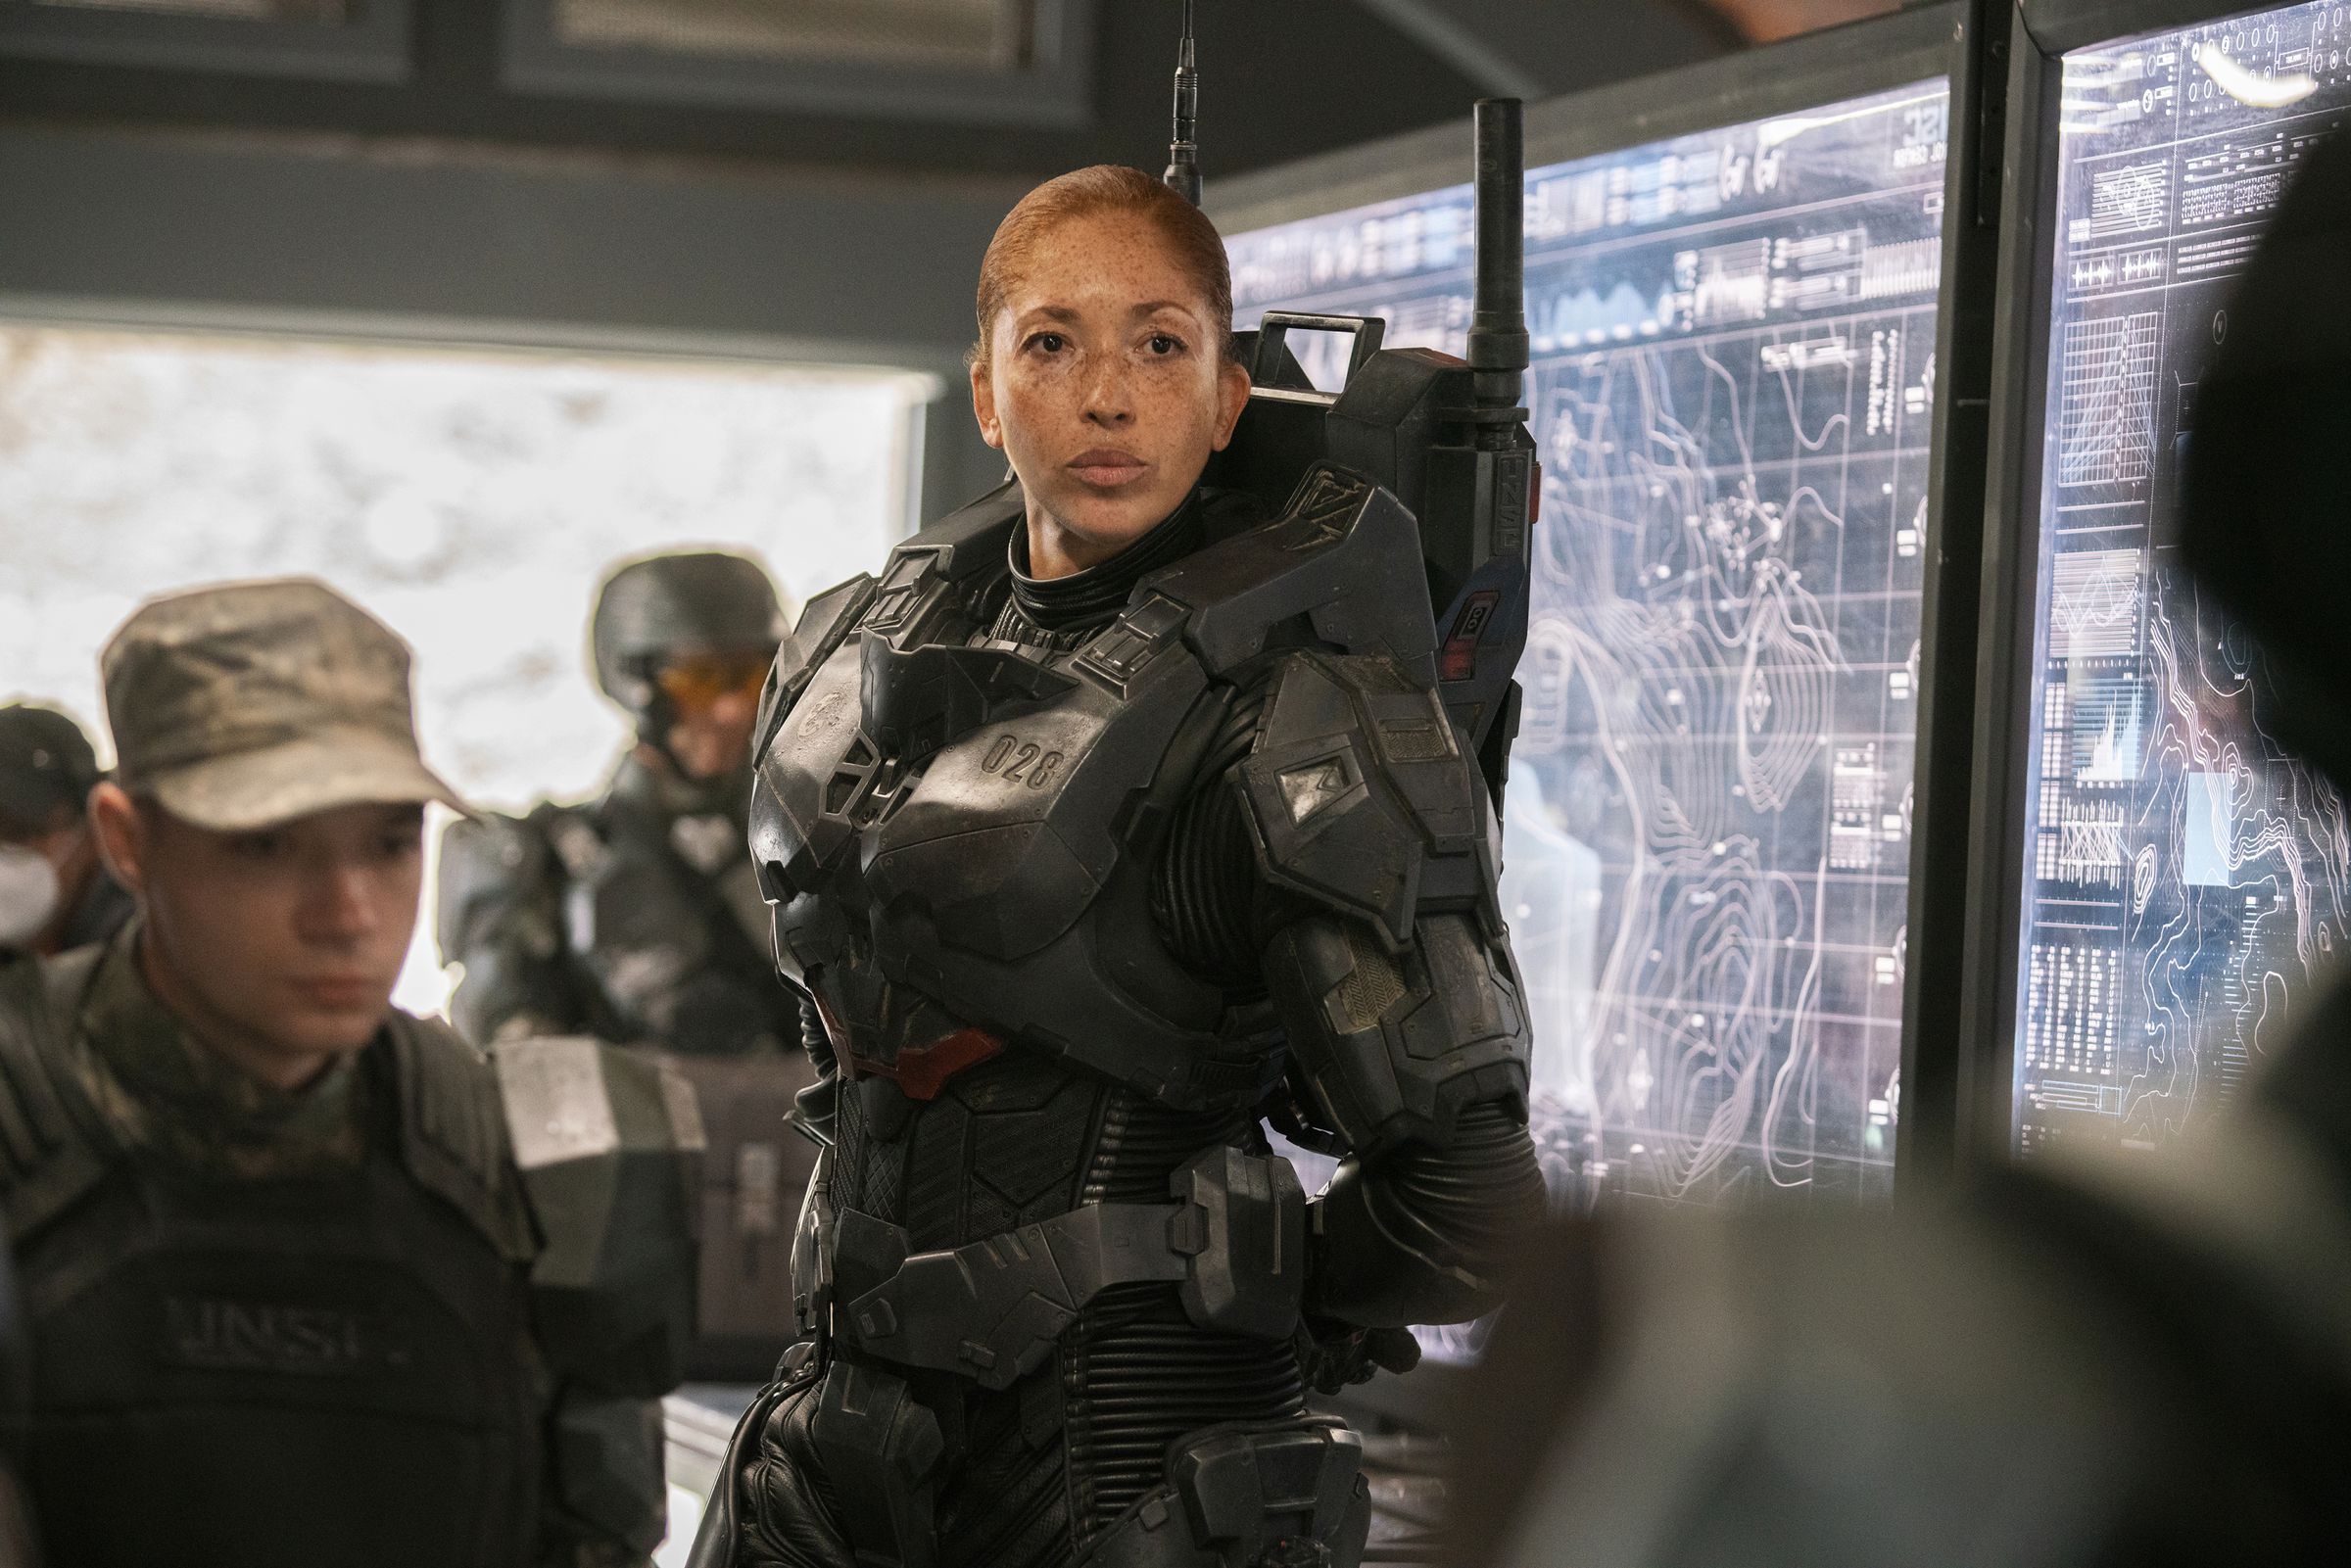 Photo from Halo season 1 episode 5 featuring Riz-028 (Natasha Culzac) in Spartan armor.